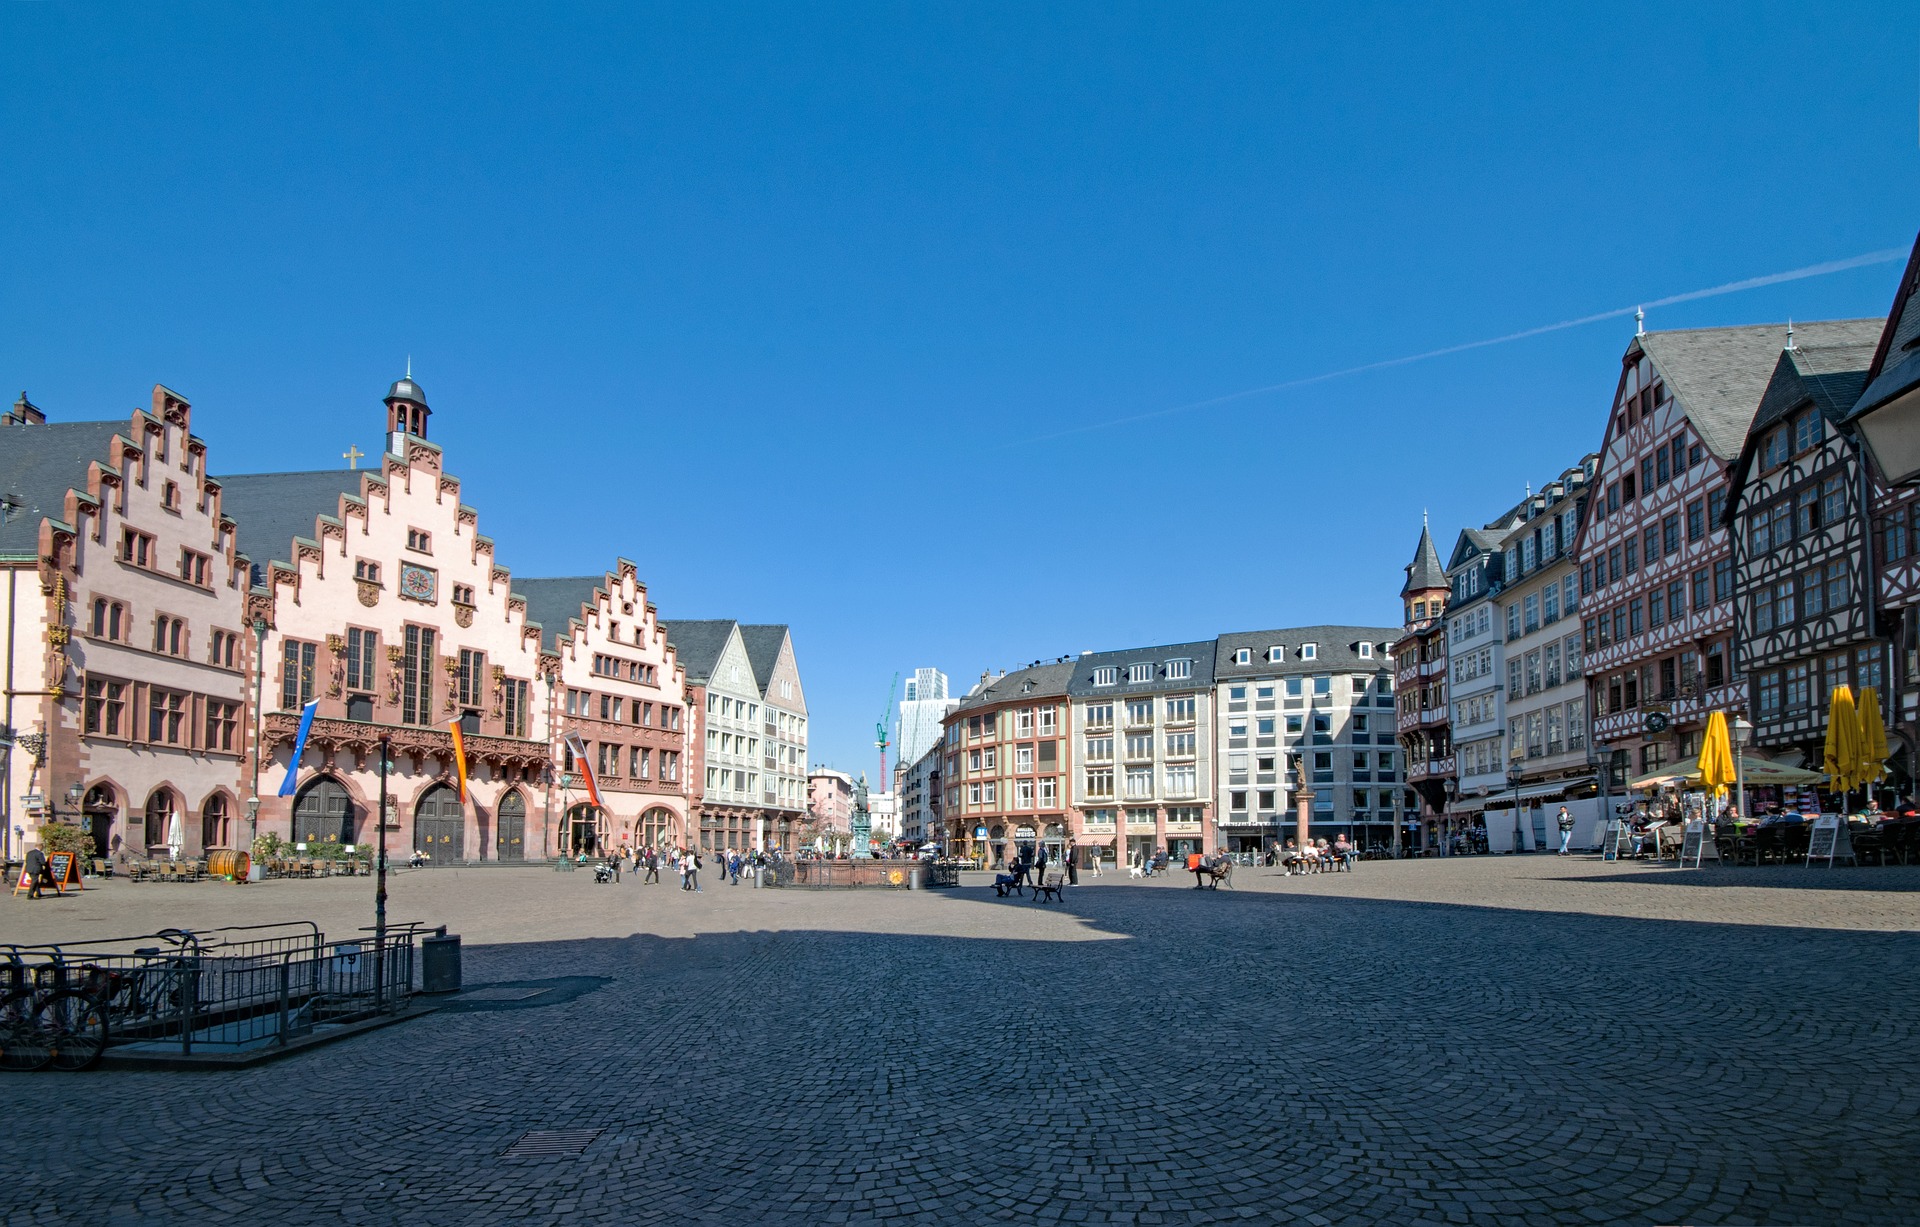 Römerberg,, Historical market square in Frankfurt, Germany